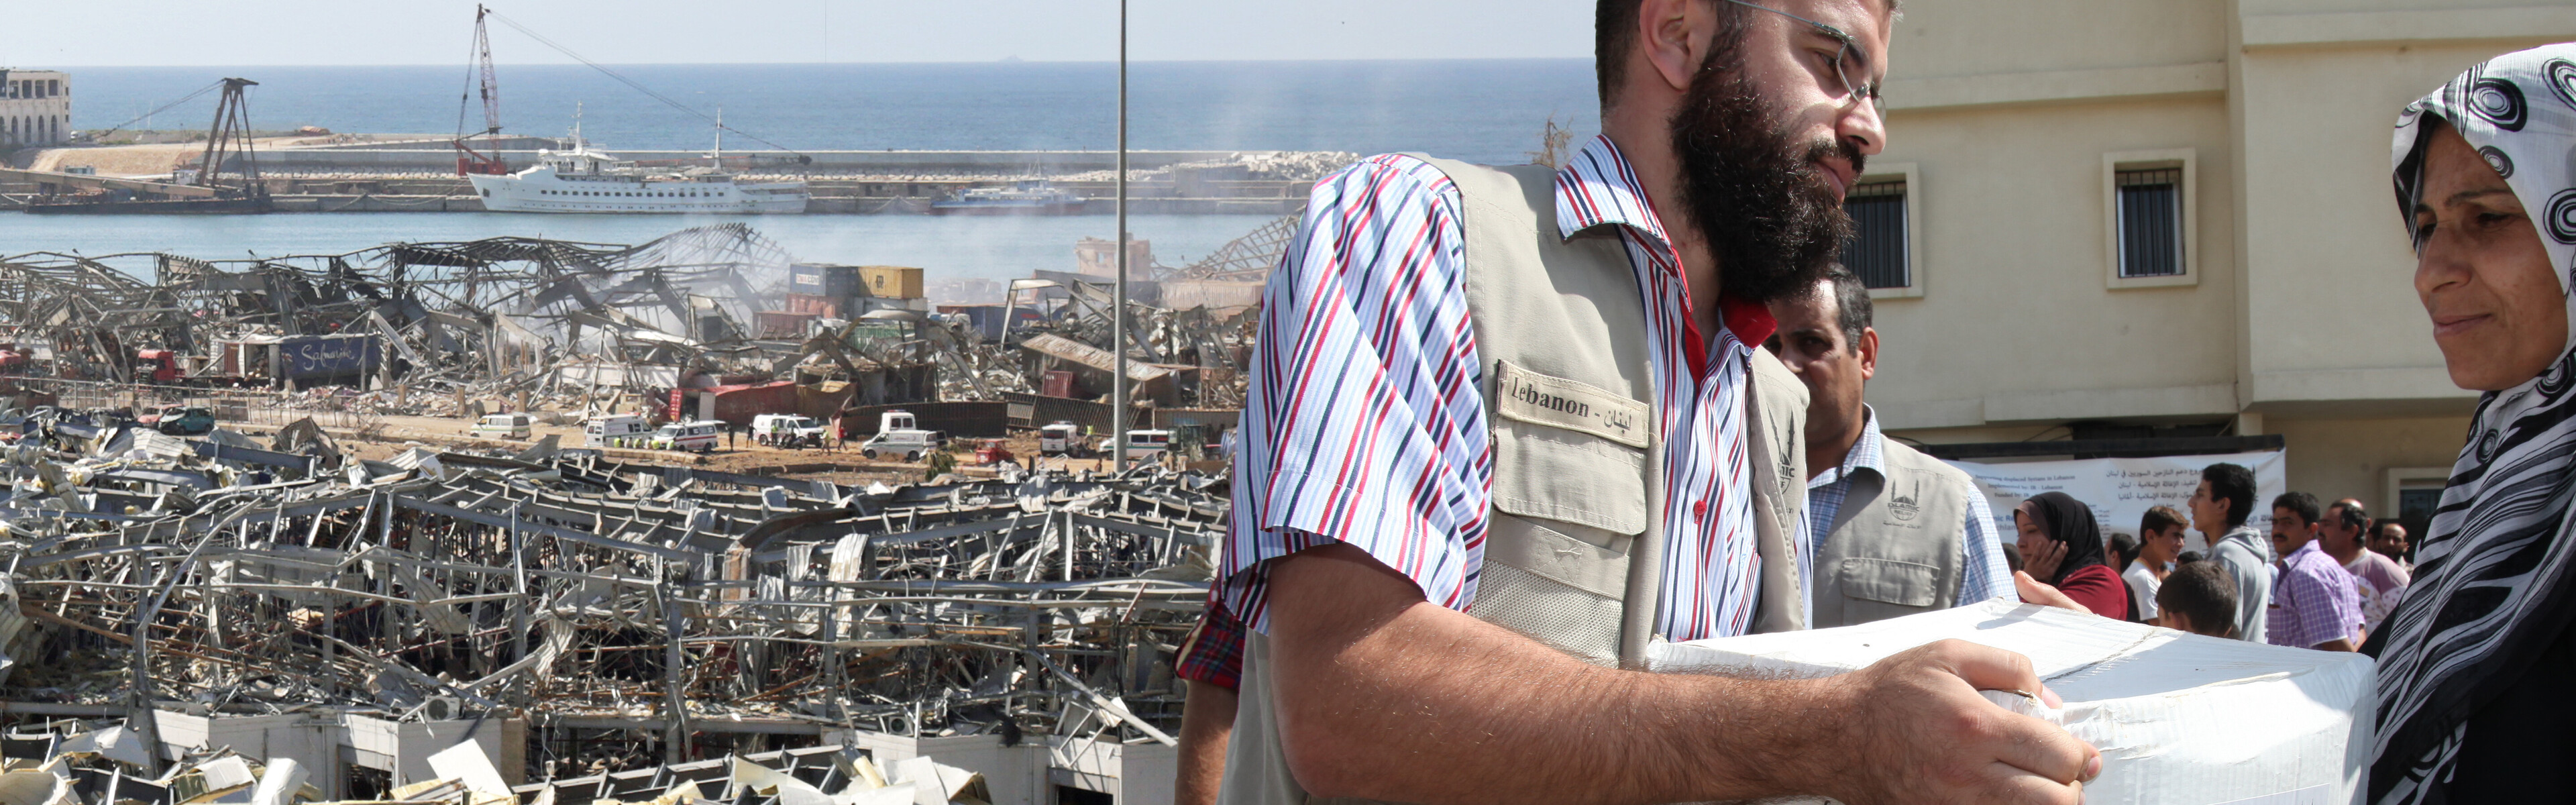 Explosion Beirut/Libanon: Unser Bündnis leistet Nothilfe